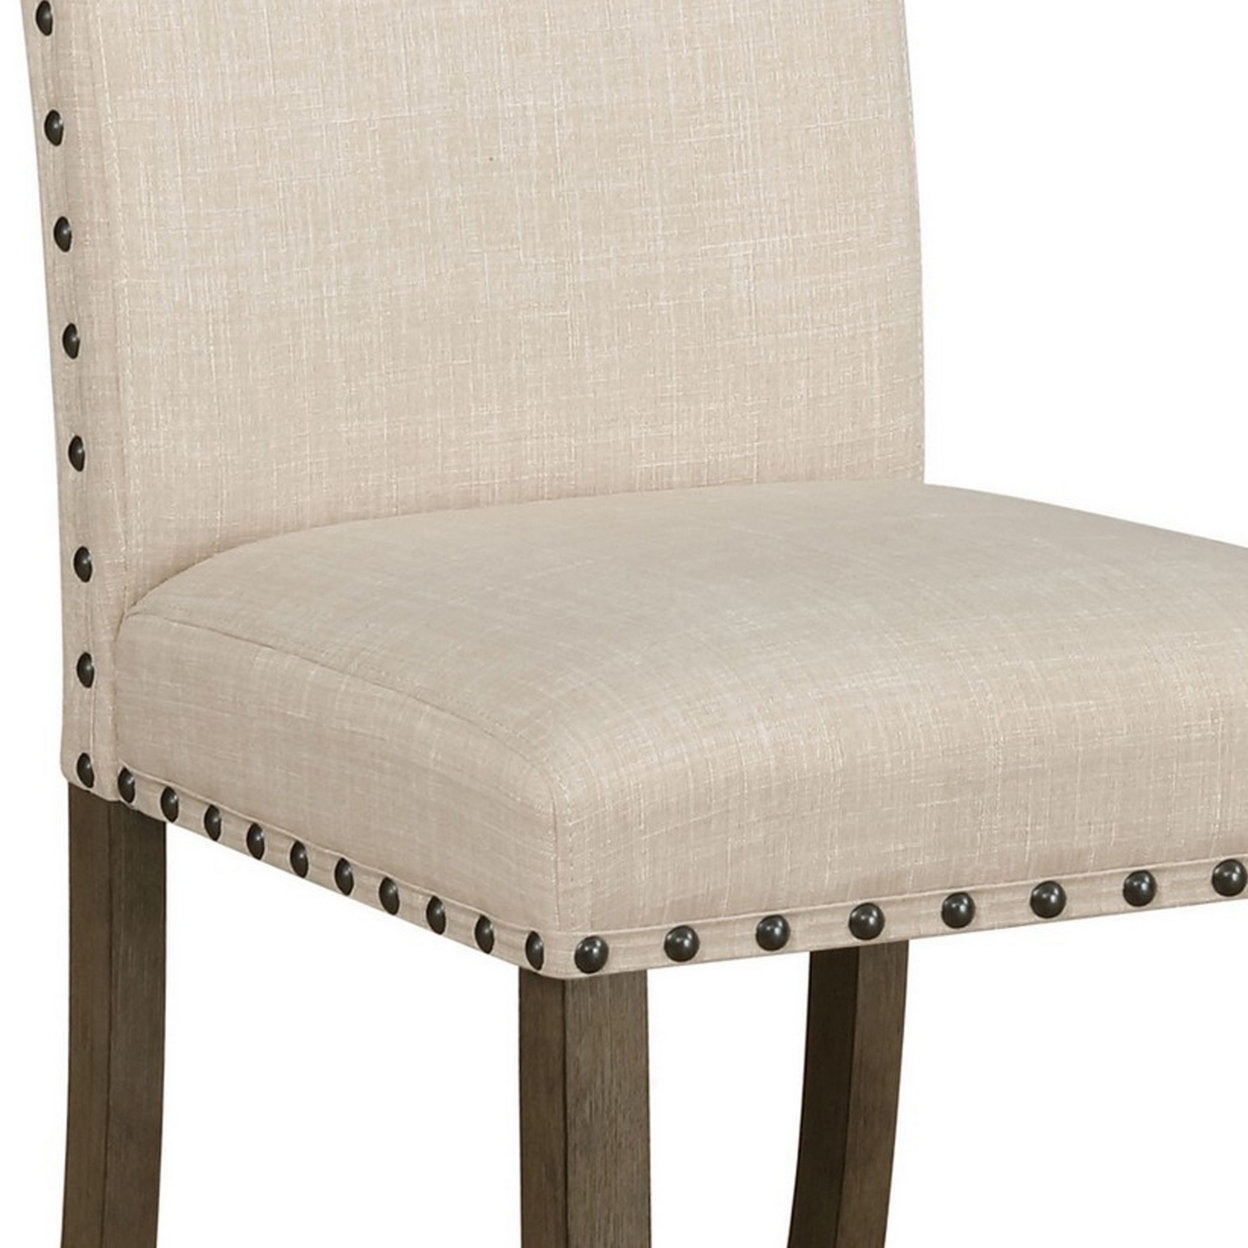 19 Inch Beige Fabric Dining Chair, Set Of 2, Rustic Brown, Nailhead Trim- Saltoro Sherpi